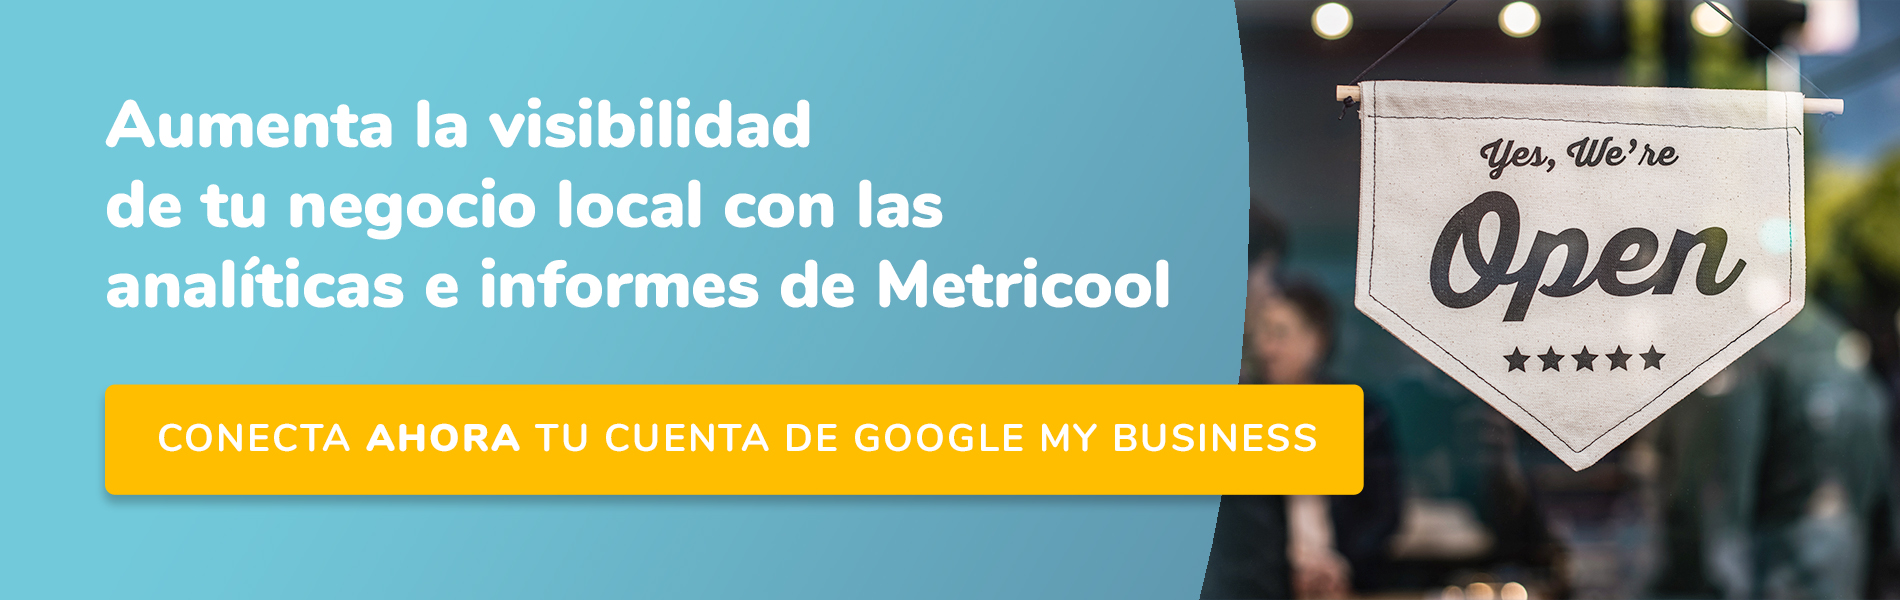 Google My Business con metricool